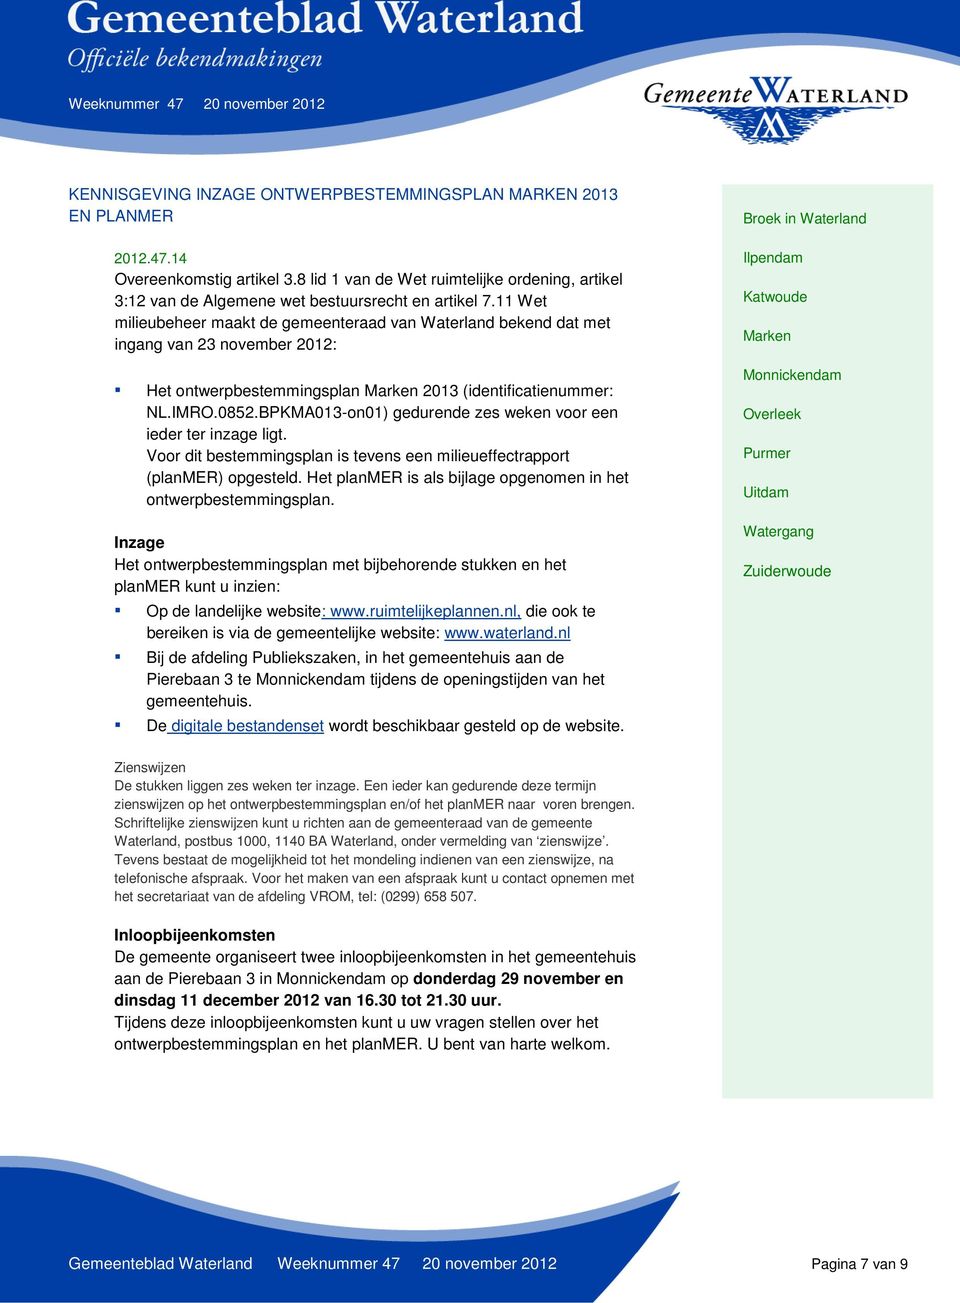 11 Wet milieubeheer maakt de gemeenteraad van Waterland bekend dat met ingang van 23 november 2012: Het ontwerpbestemmingsplan 2013 (identificatienummer: NL.IMRO.0852.